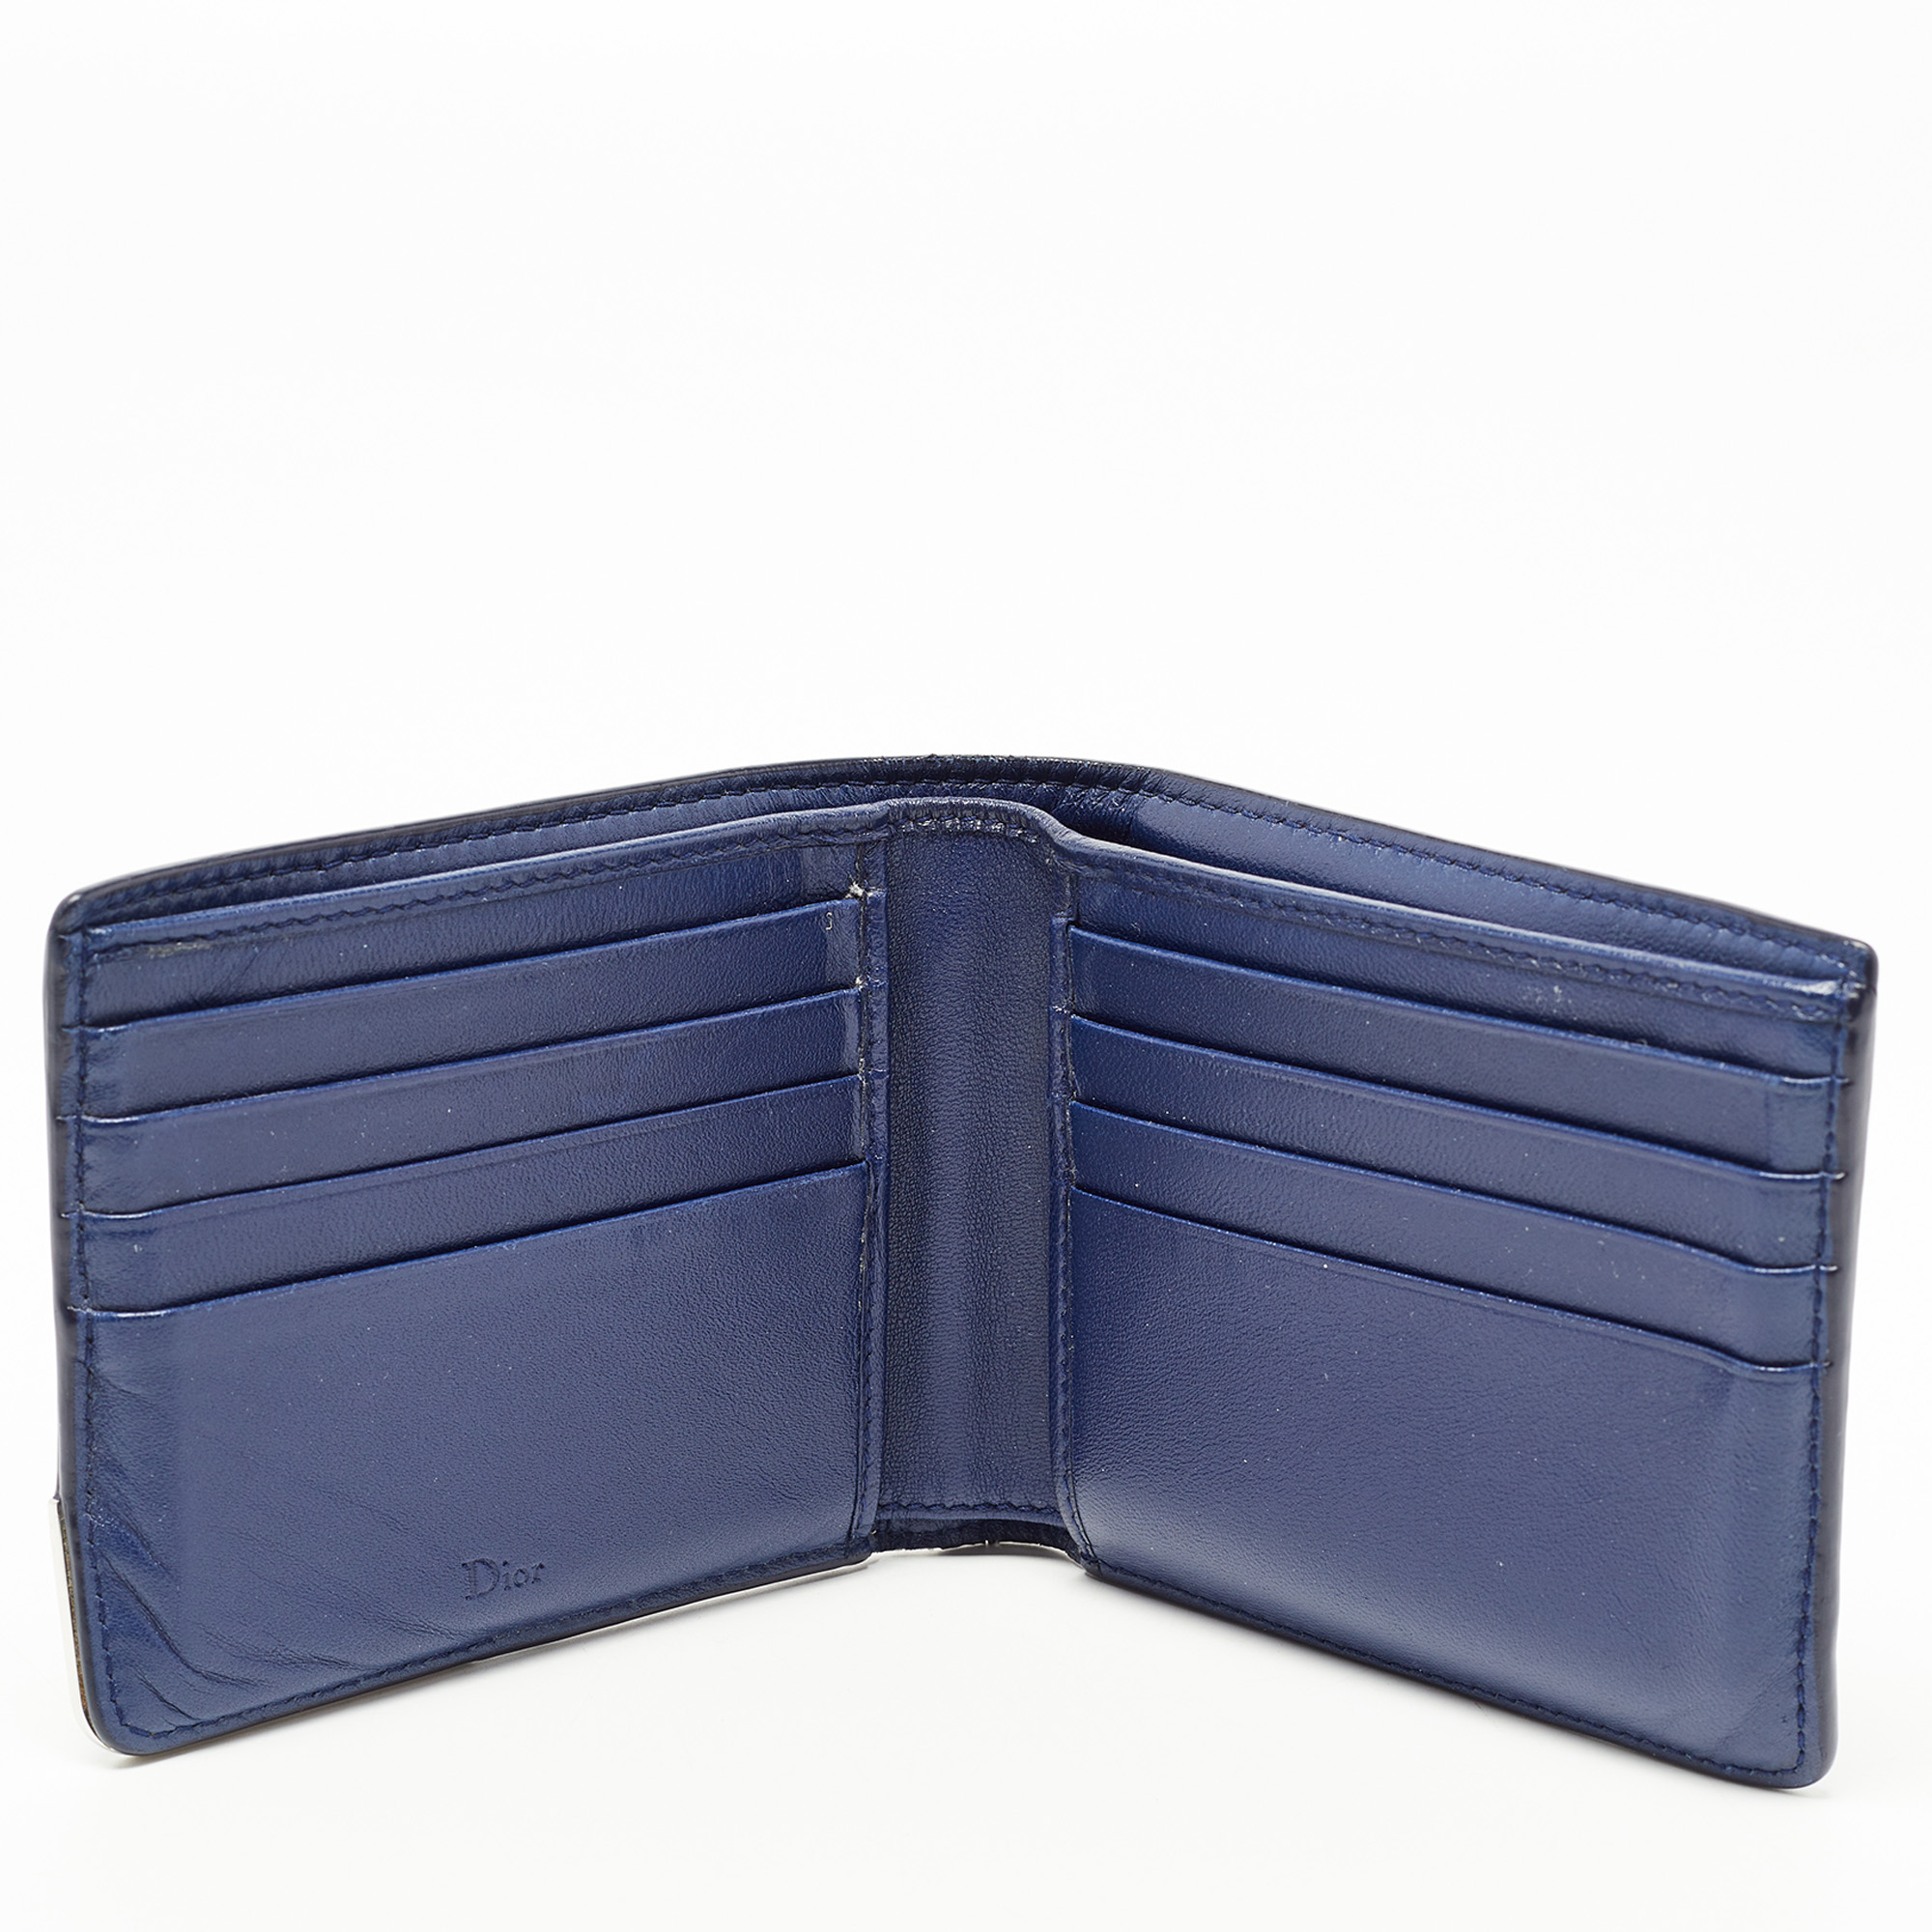 Dior Navy Blue Watersnake Leather Metal Edge Bifold Wallet